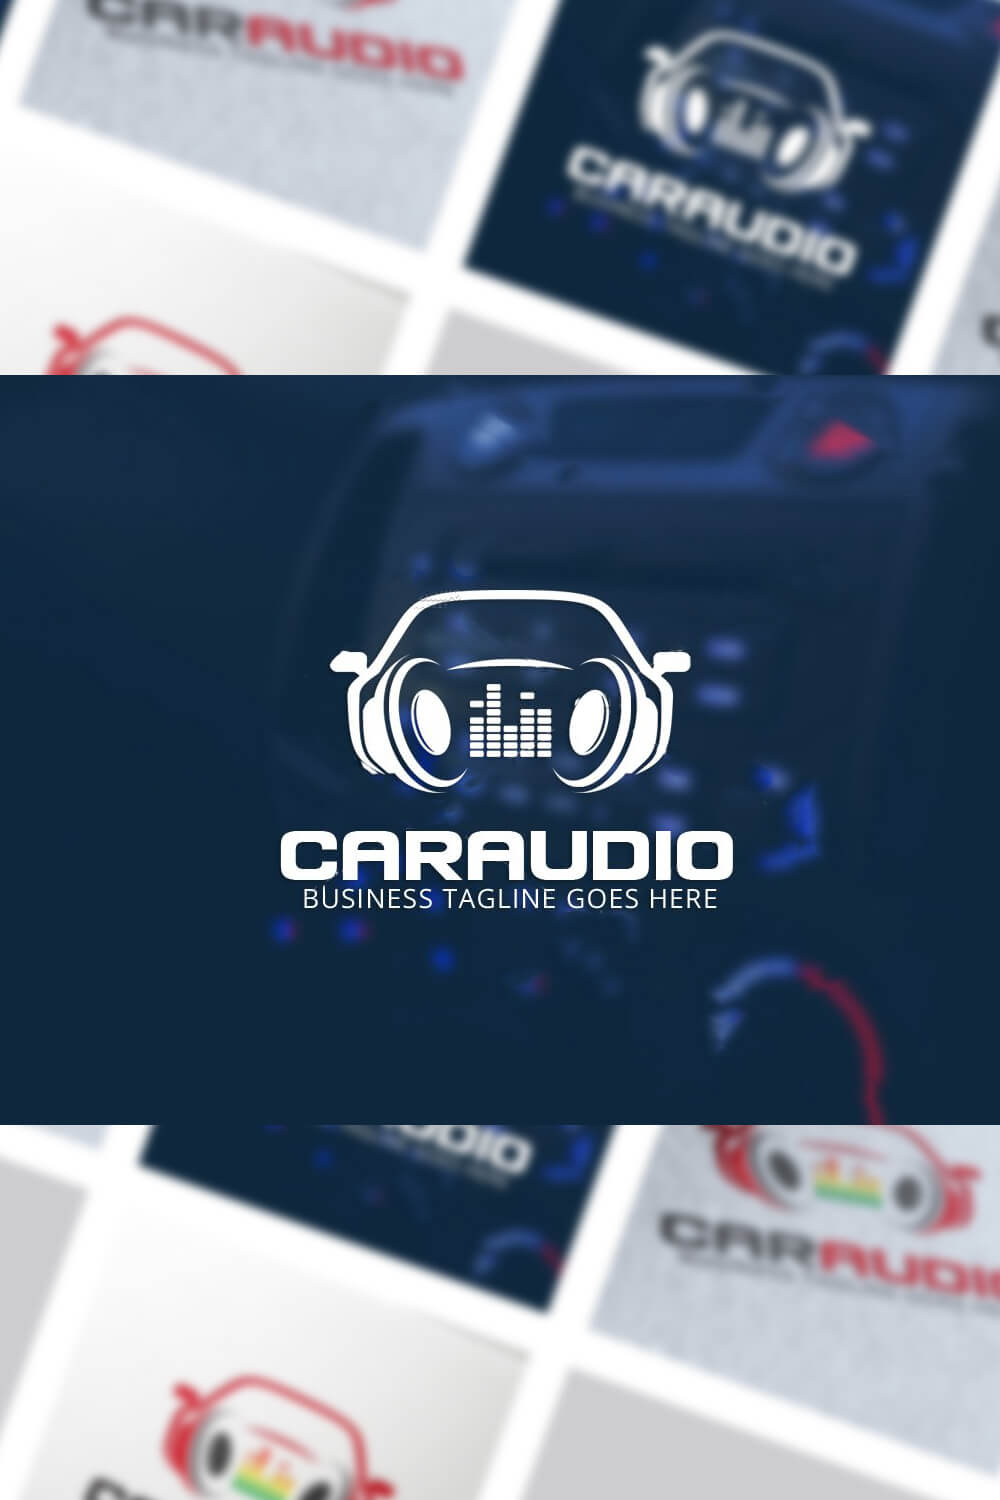 Caraudio logo on a blue blurred background.